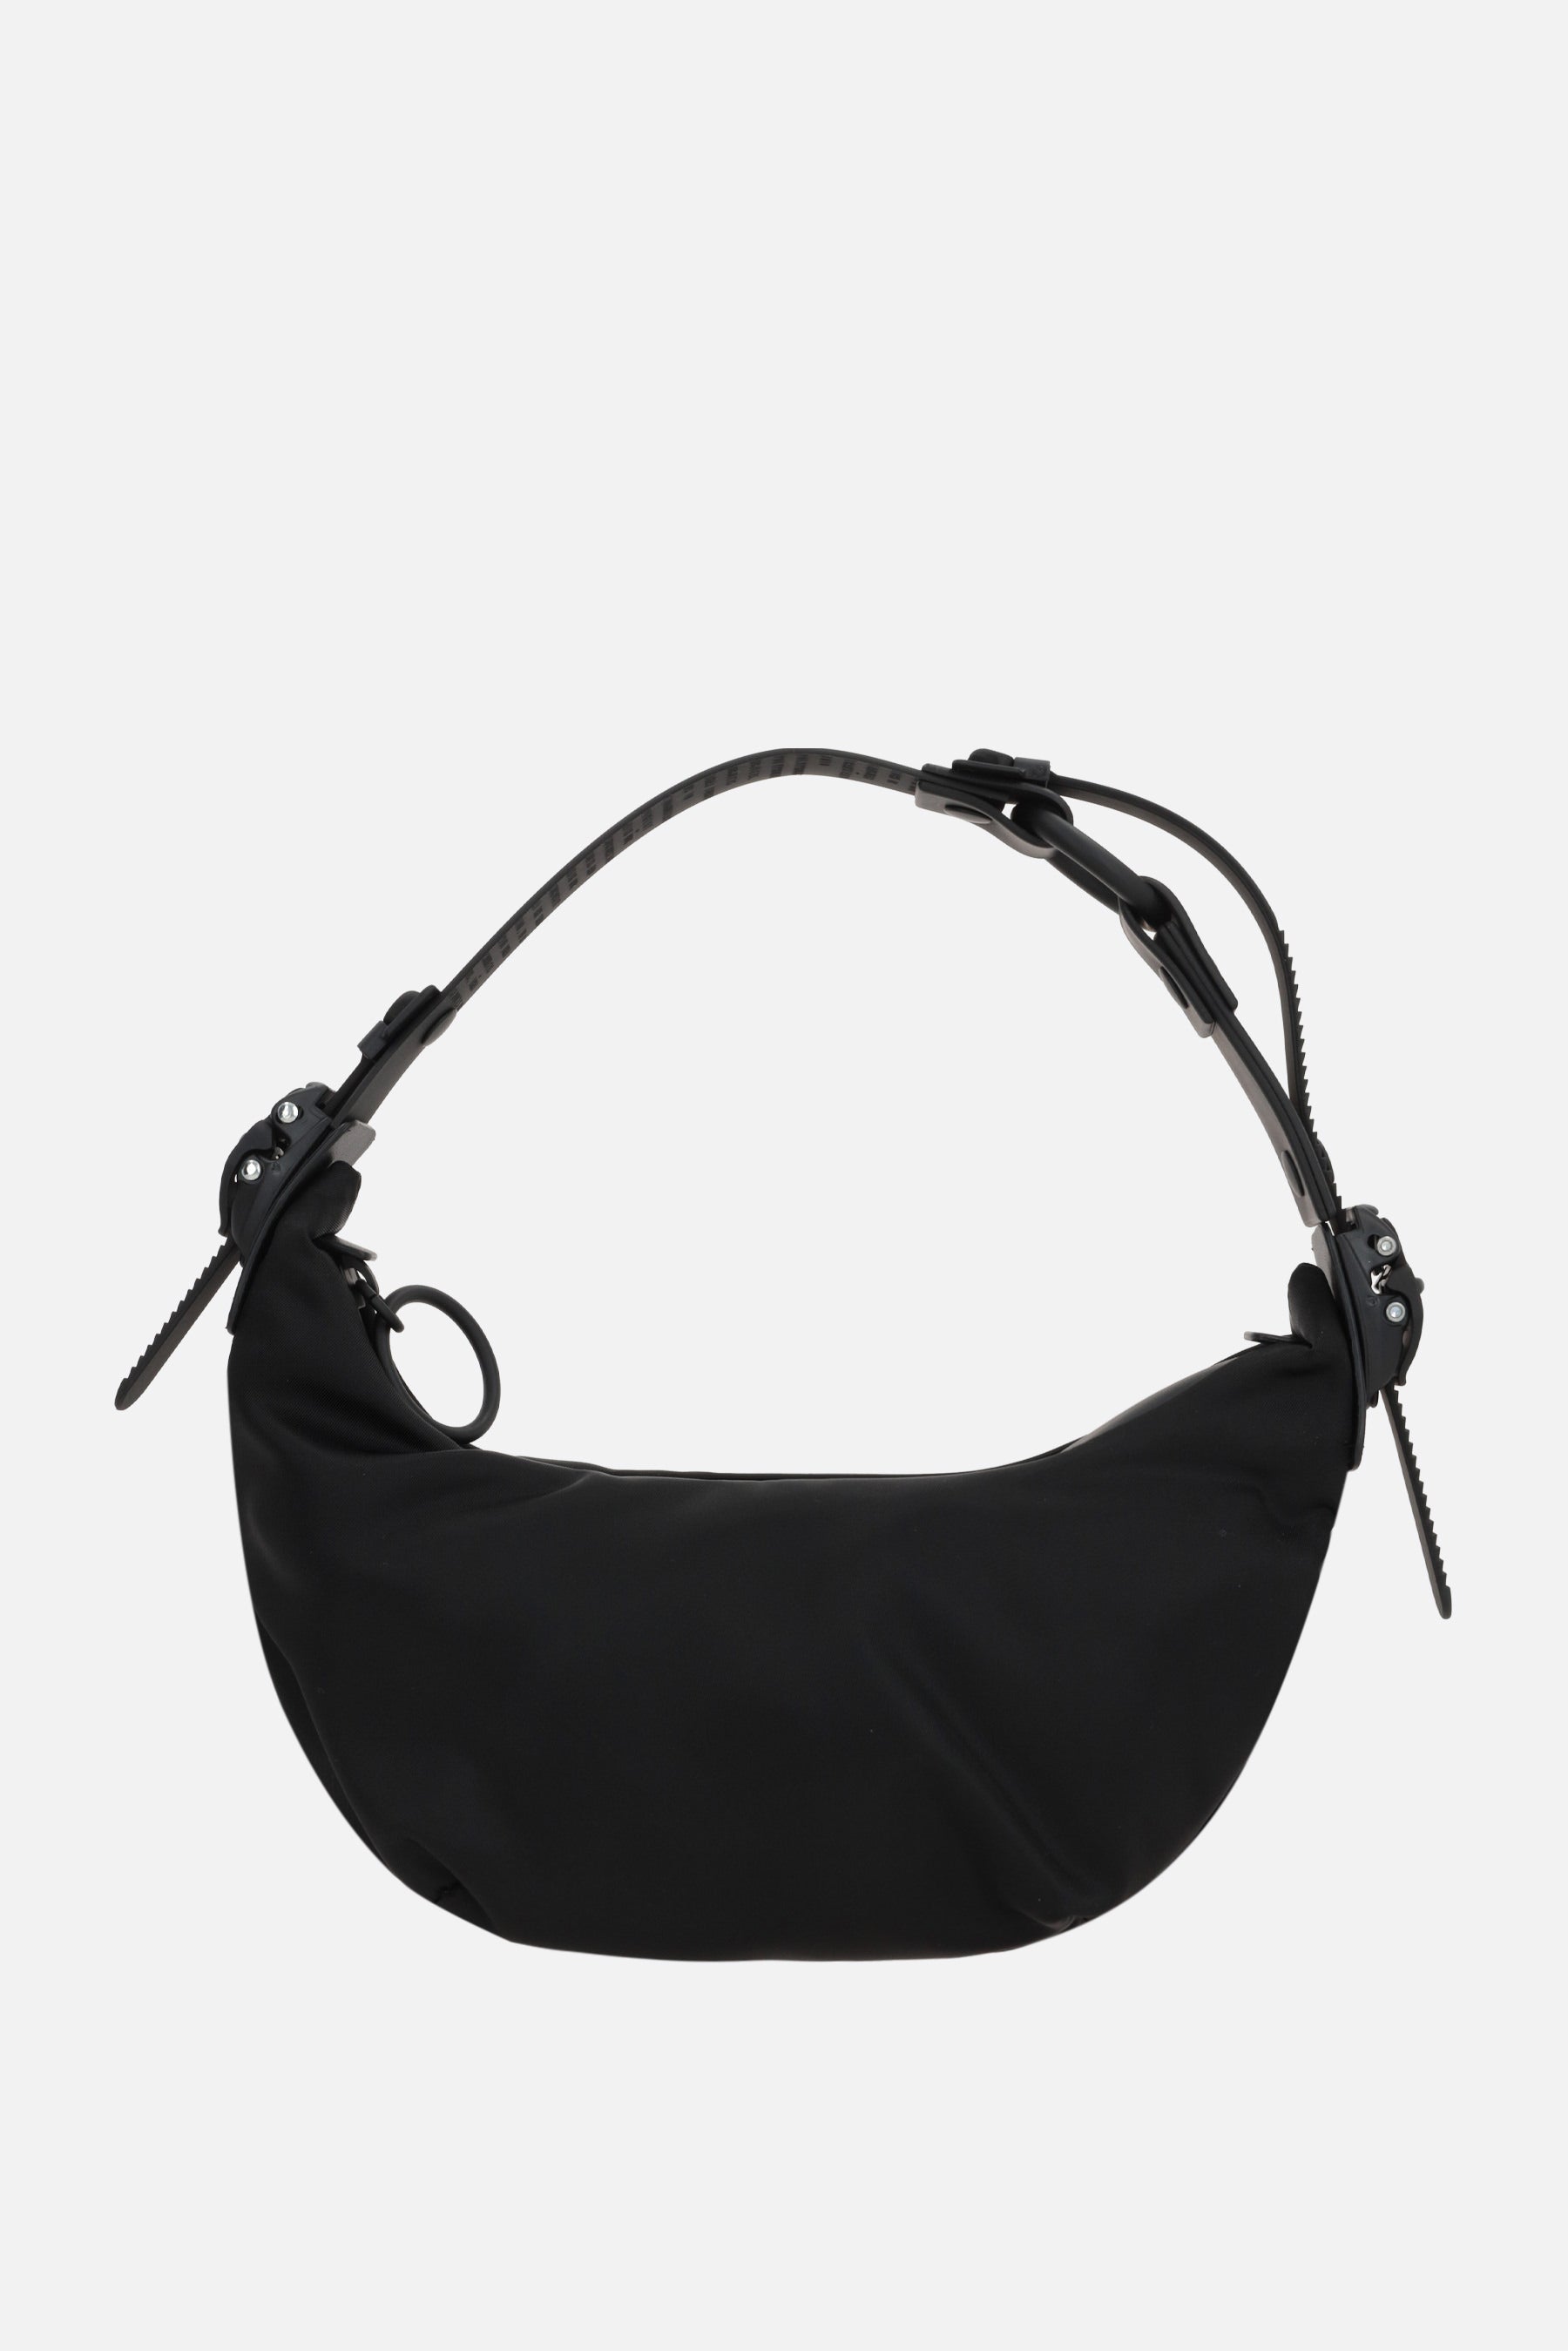 HM0 micro twill handbag